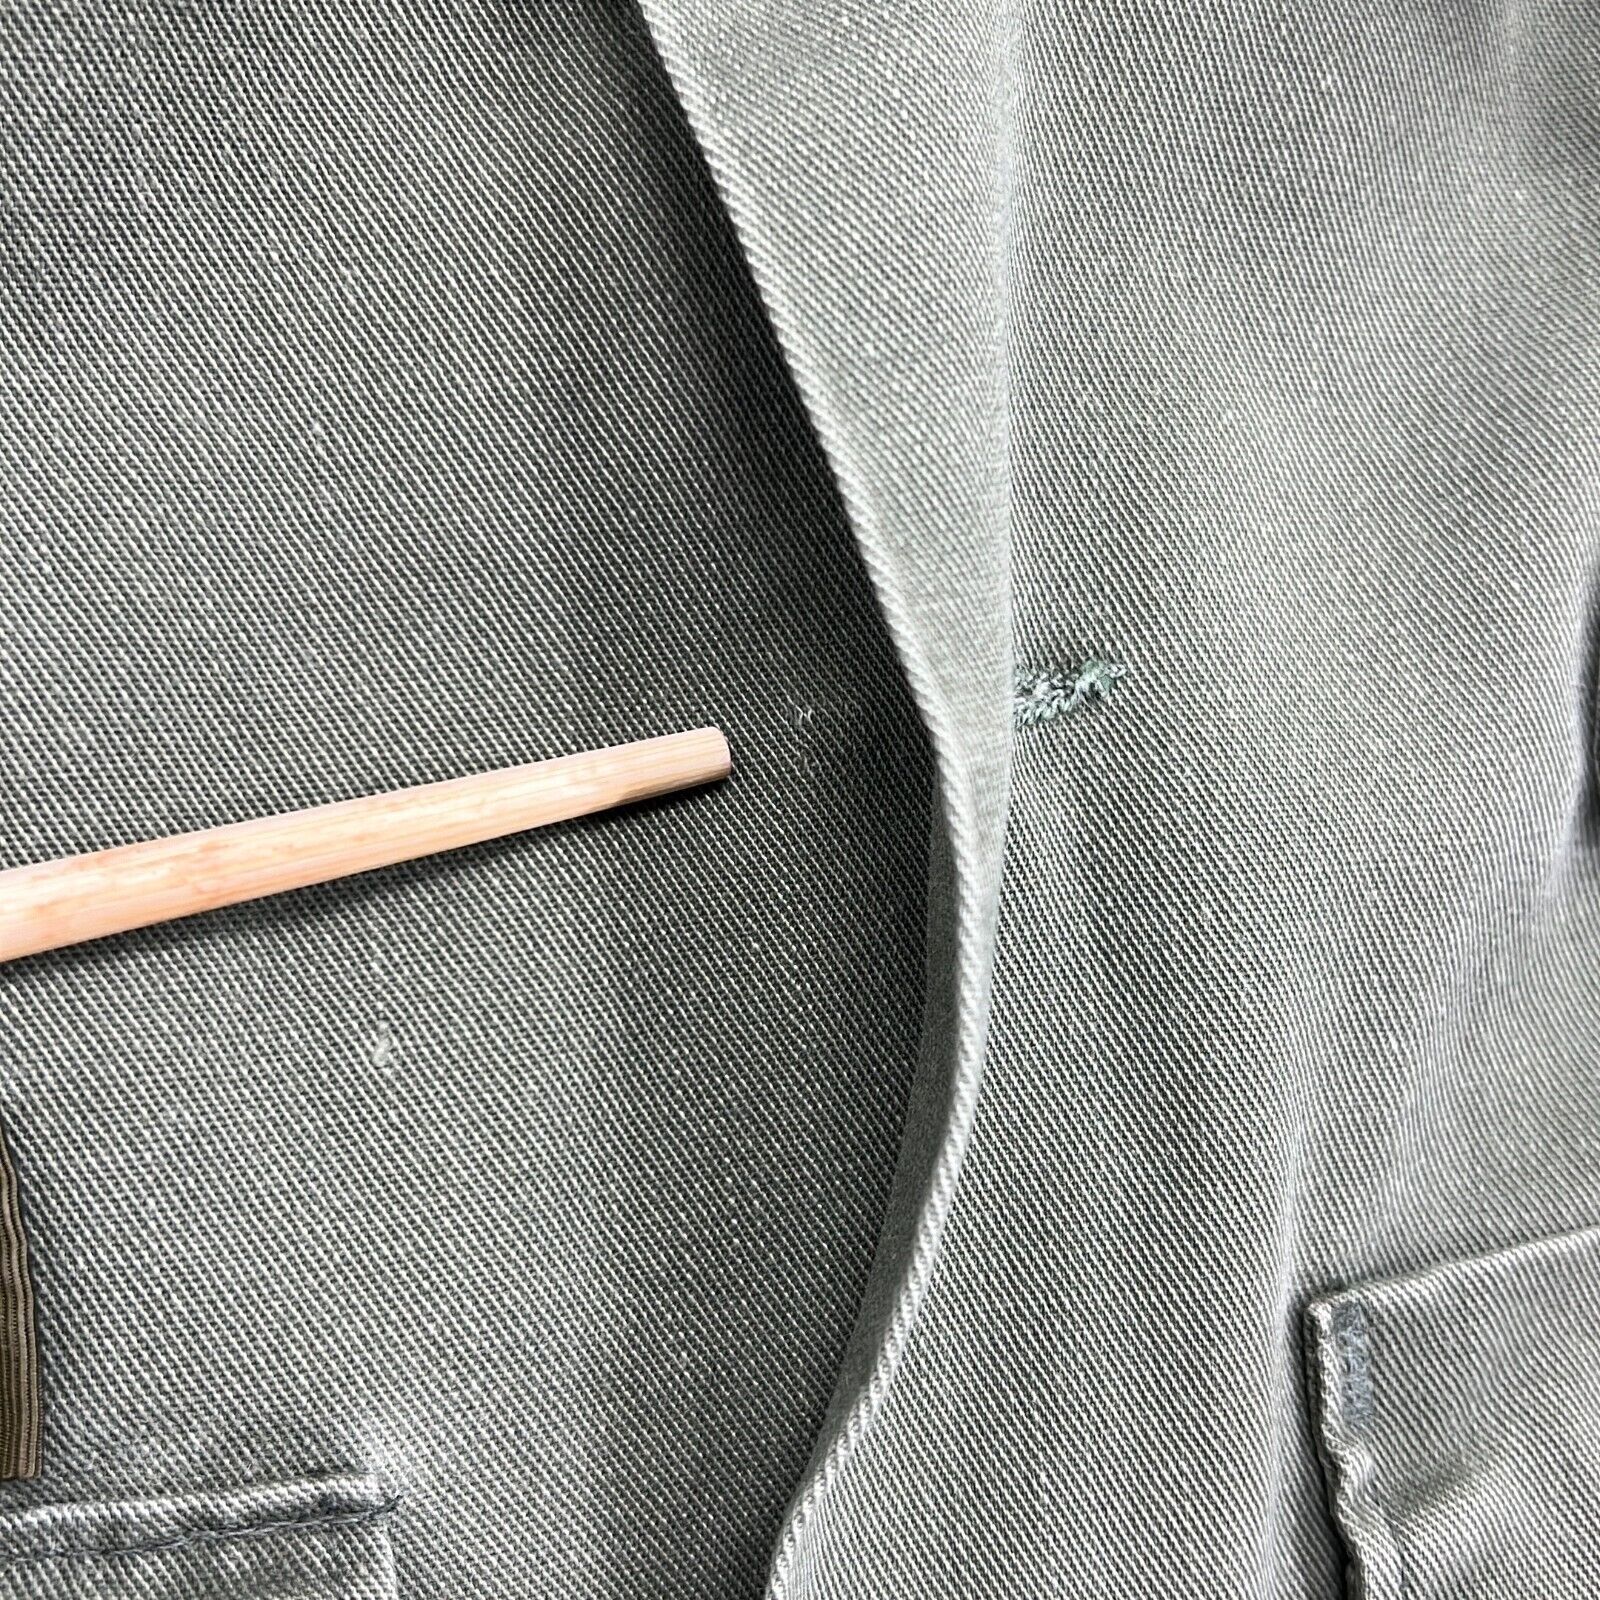 Men's Green Long Sleeve Front Pockets Hell On Wheels Uniform Button-Up Shirt